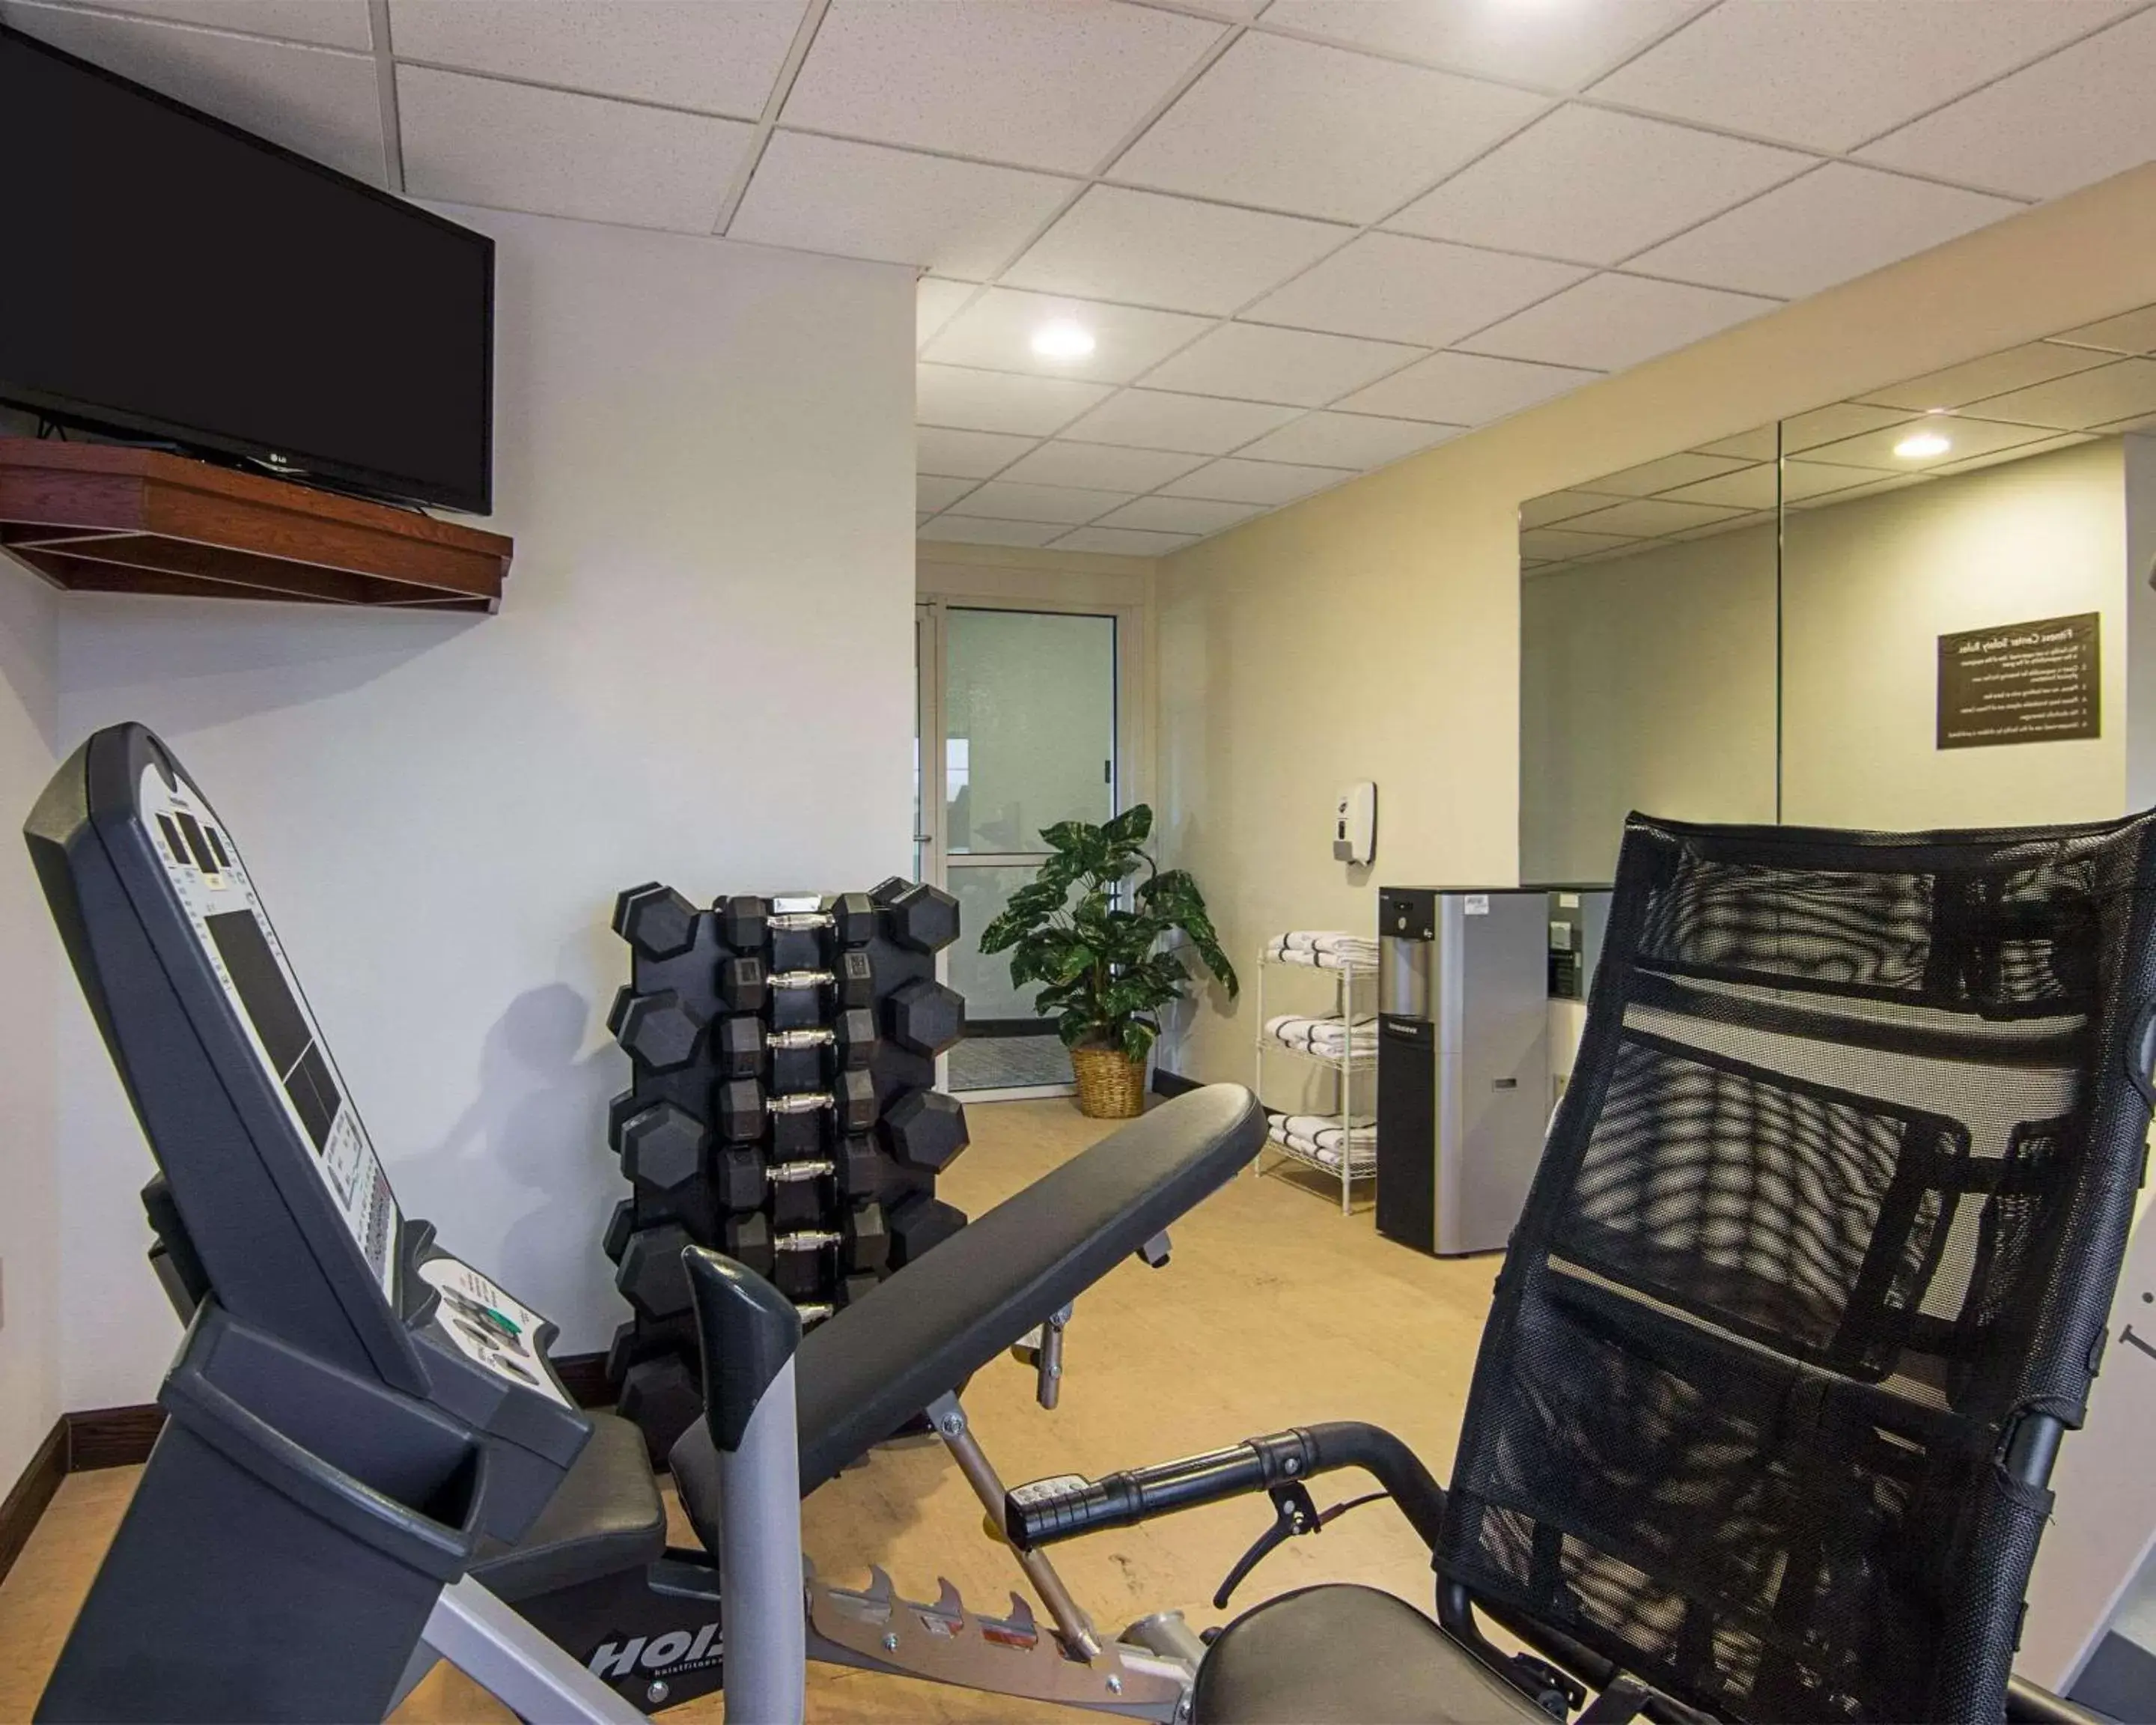 Fitness centre/facilities, Fitness Center/Facilities in Comfort Inn & Suites Grafton-Cedarburg